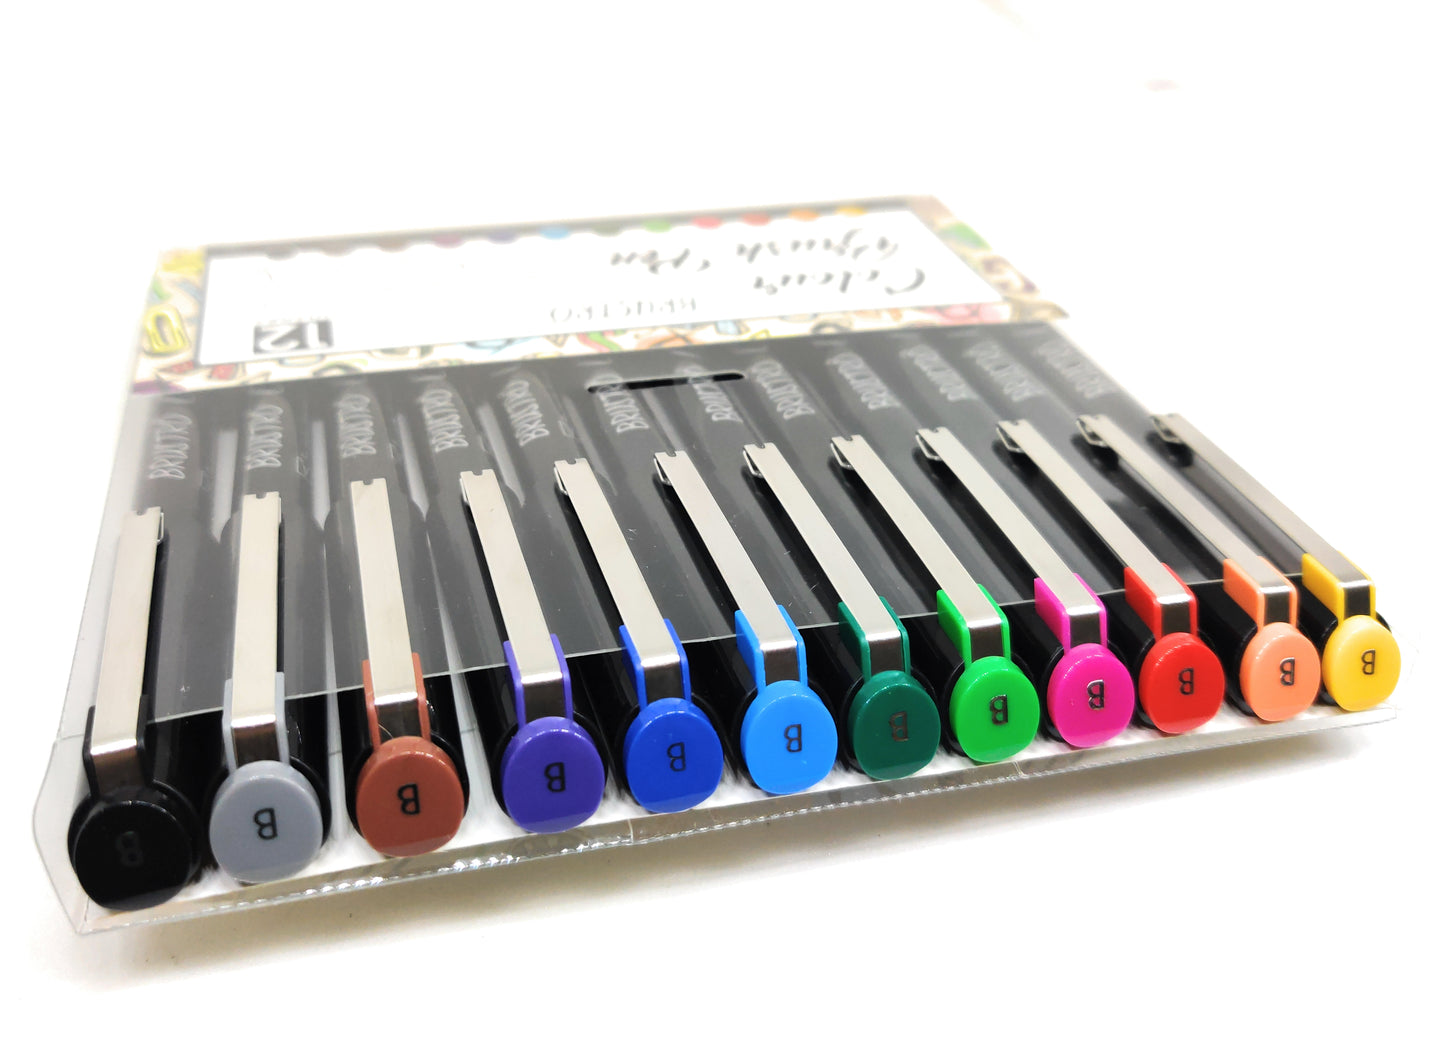 BRUSTRO Colour Brush Pens Set of 12 ( Pigment based , Hard tip brush pen ) Flexible tip for lettering and drawing techniques.